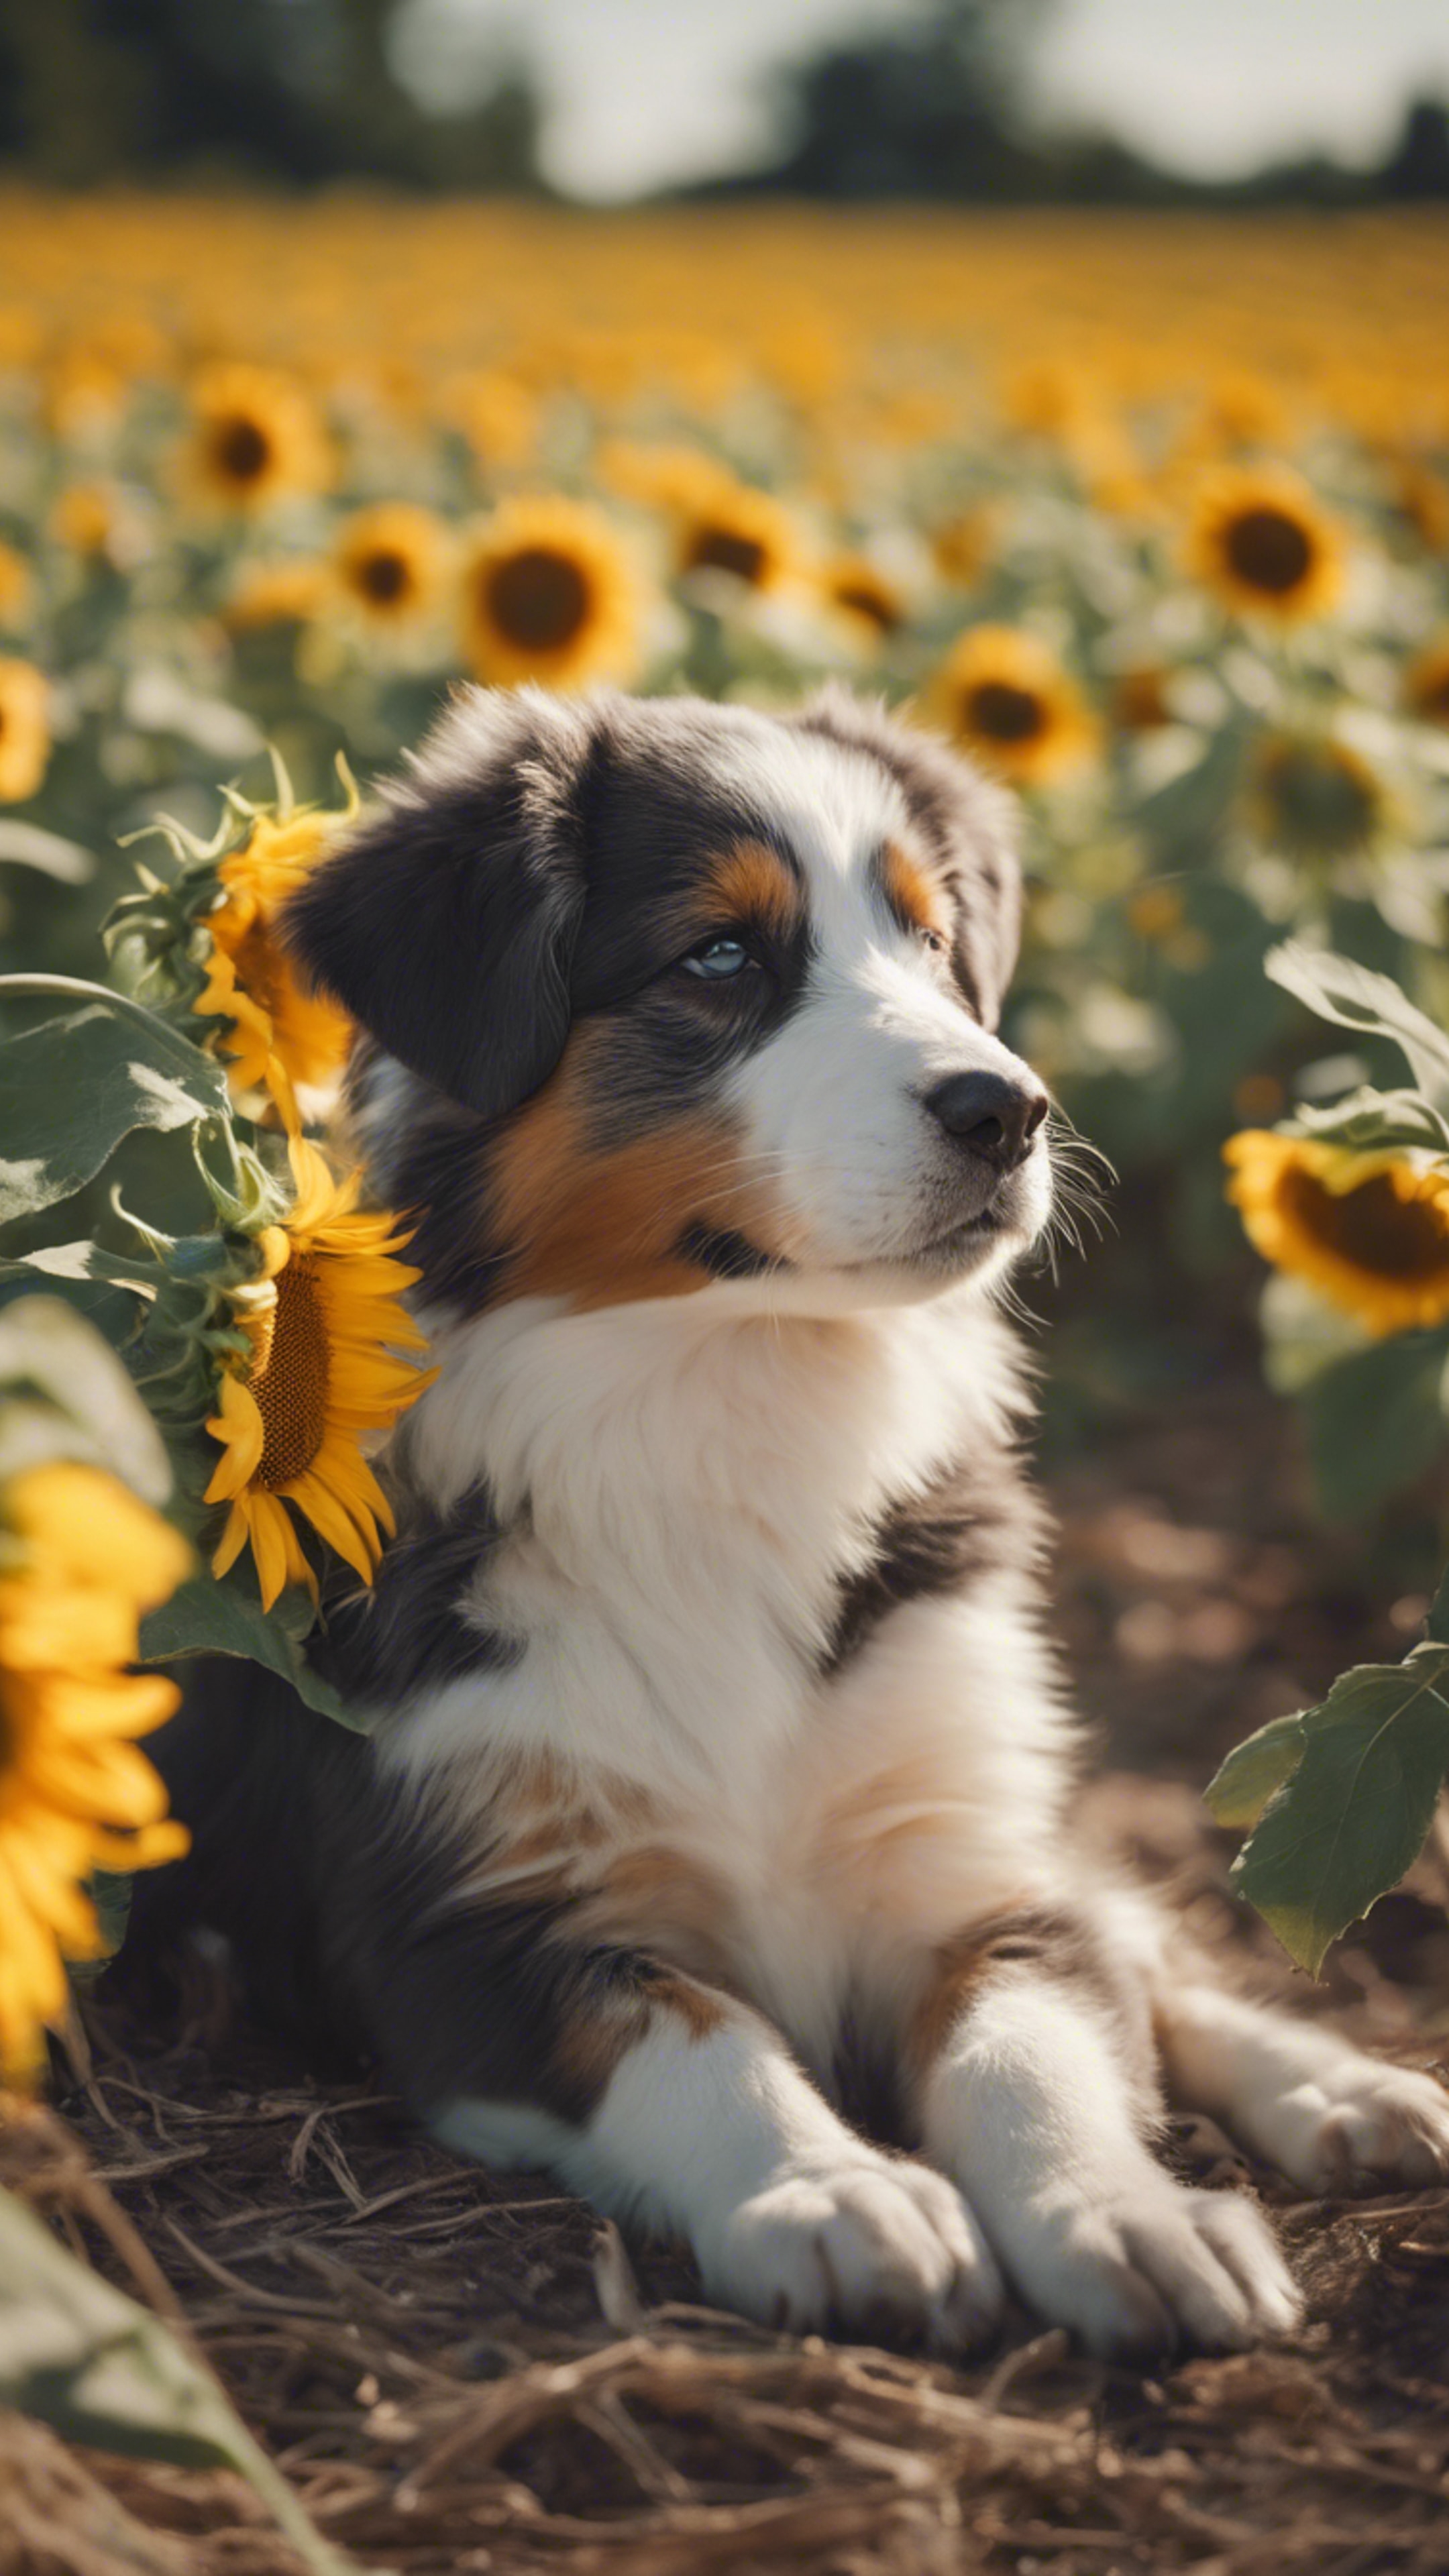 An Australian Shepard puppy dozing off in the field of blooming sunflowers under the summer sun. Tapeta[3112e983c8704a9792f4]